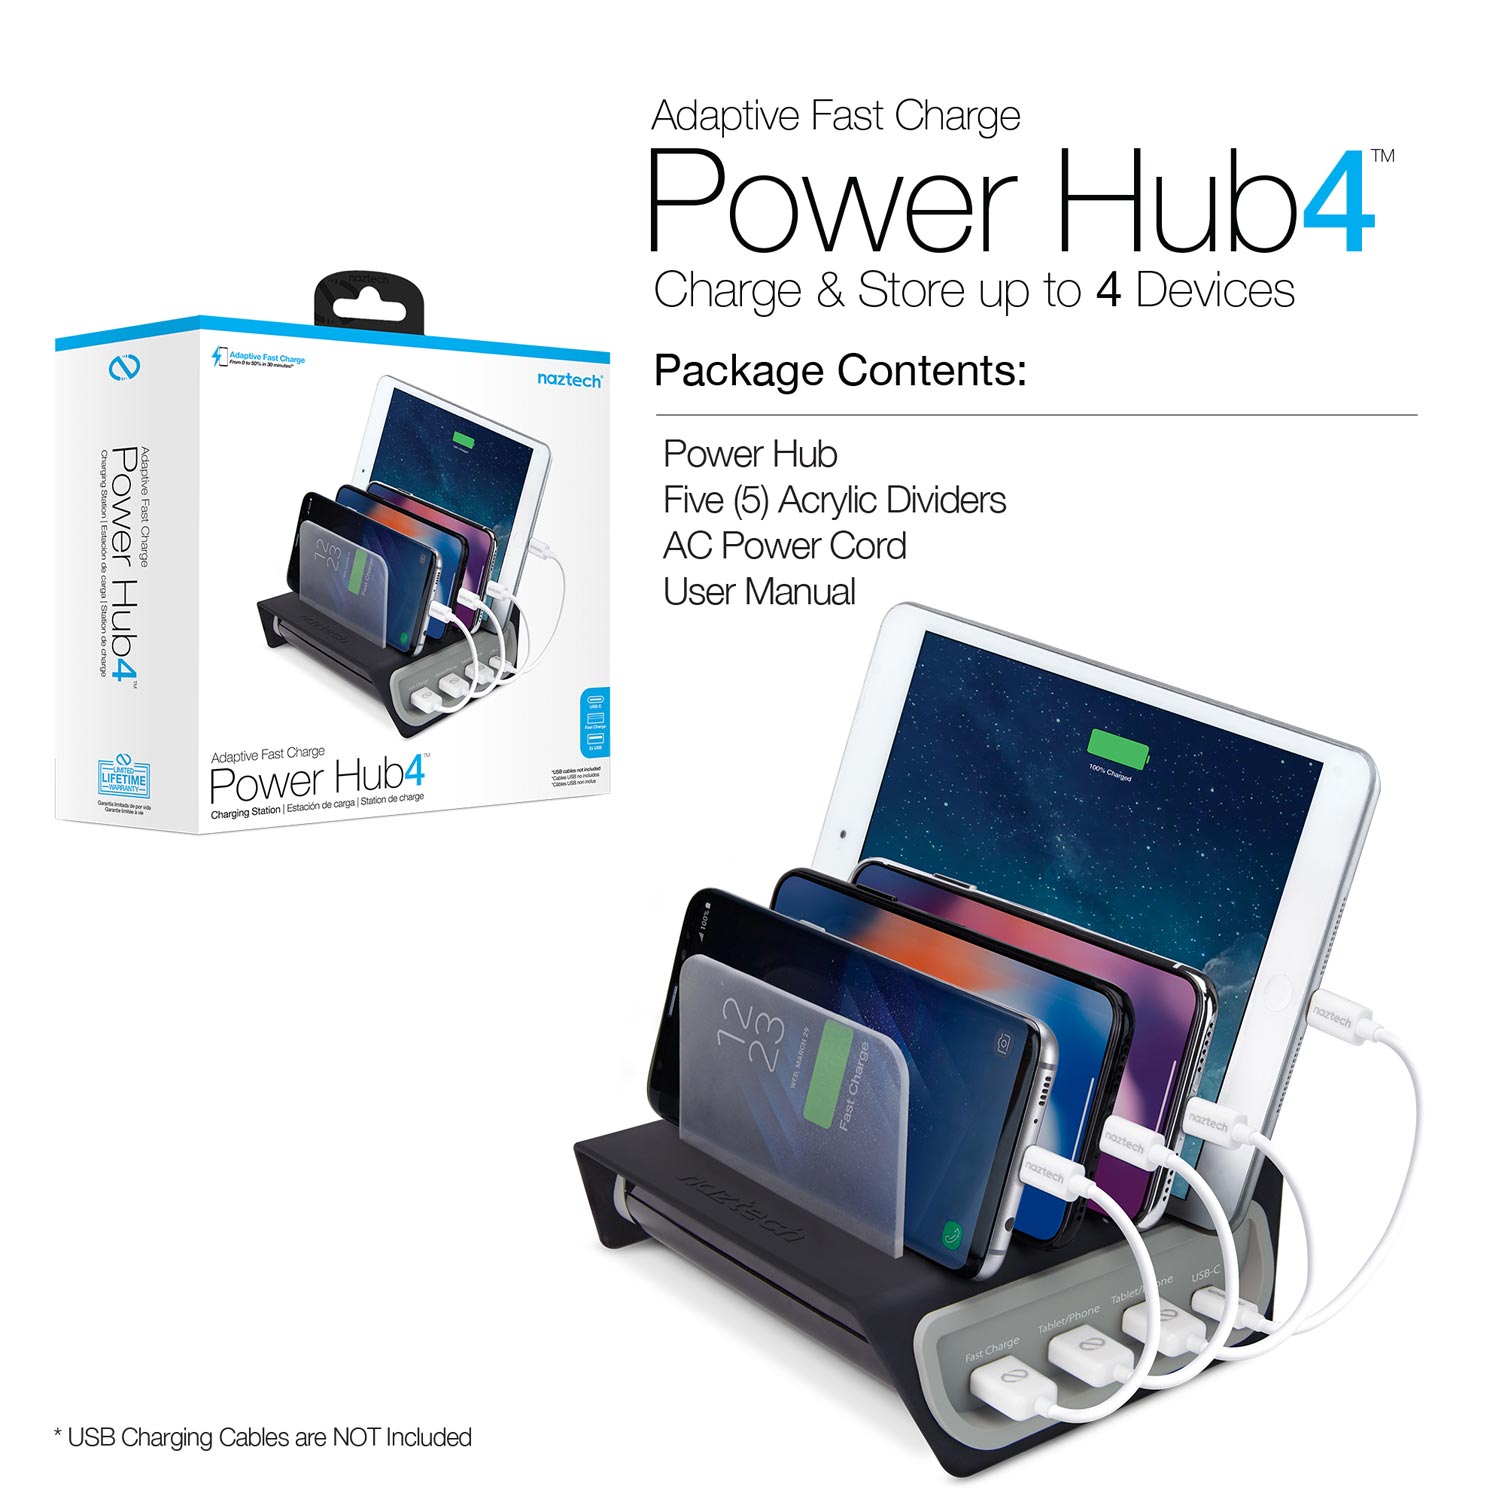 Adaptive Fast Charge Power Hub 4